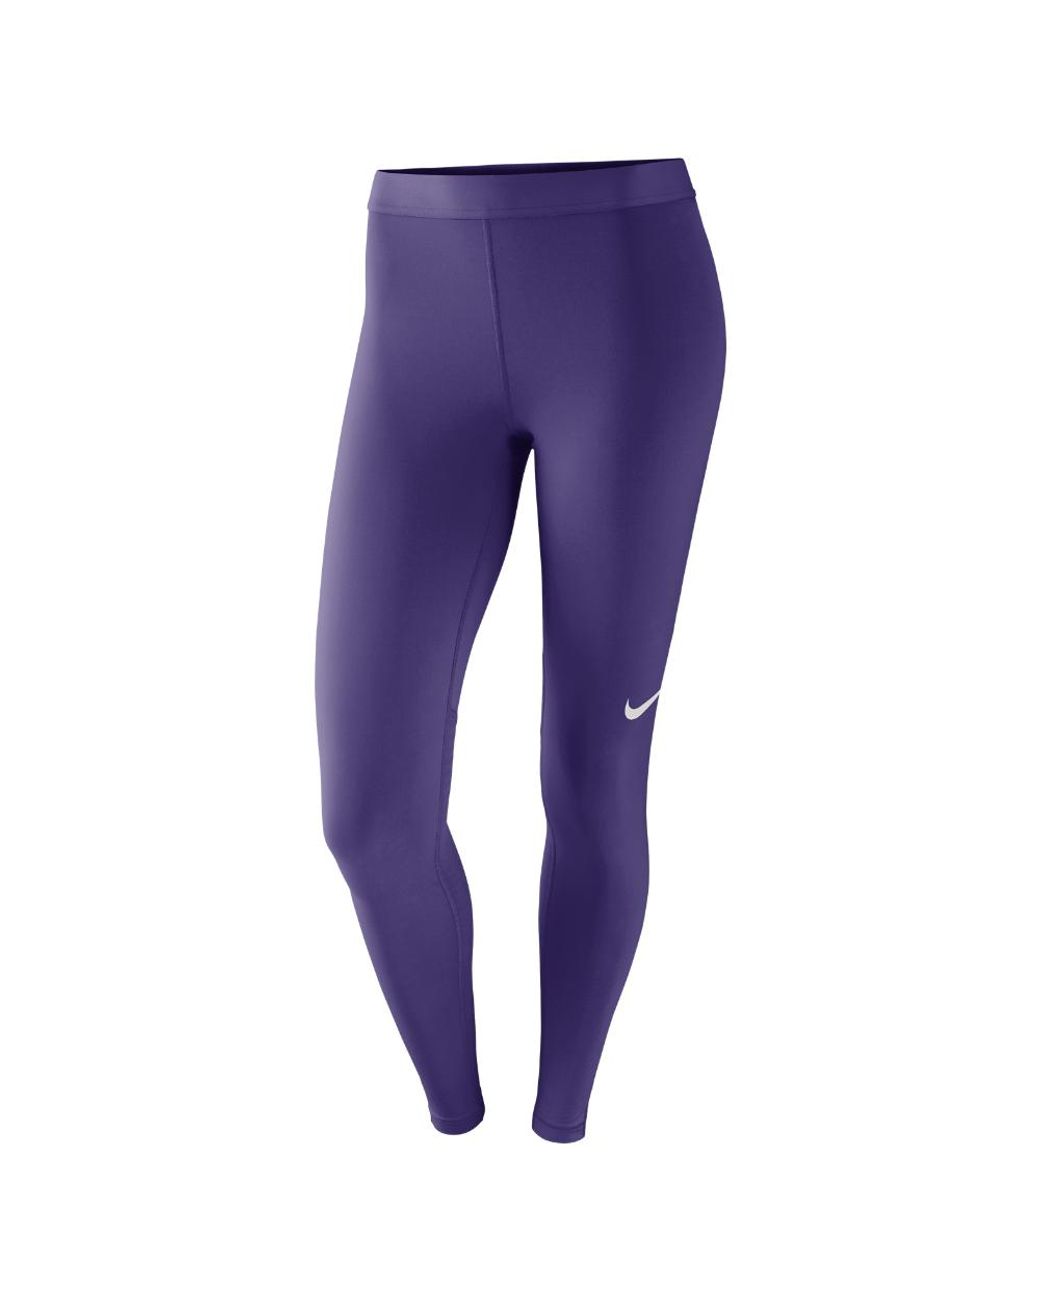 Nike College Pro (lsu) Women's Tights in Purple | Lyst